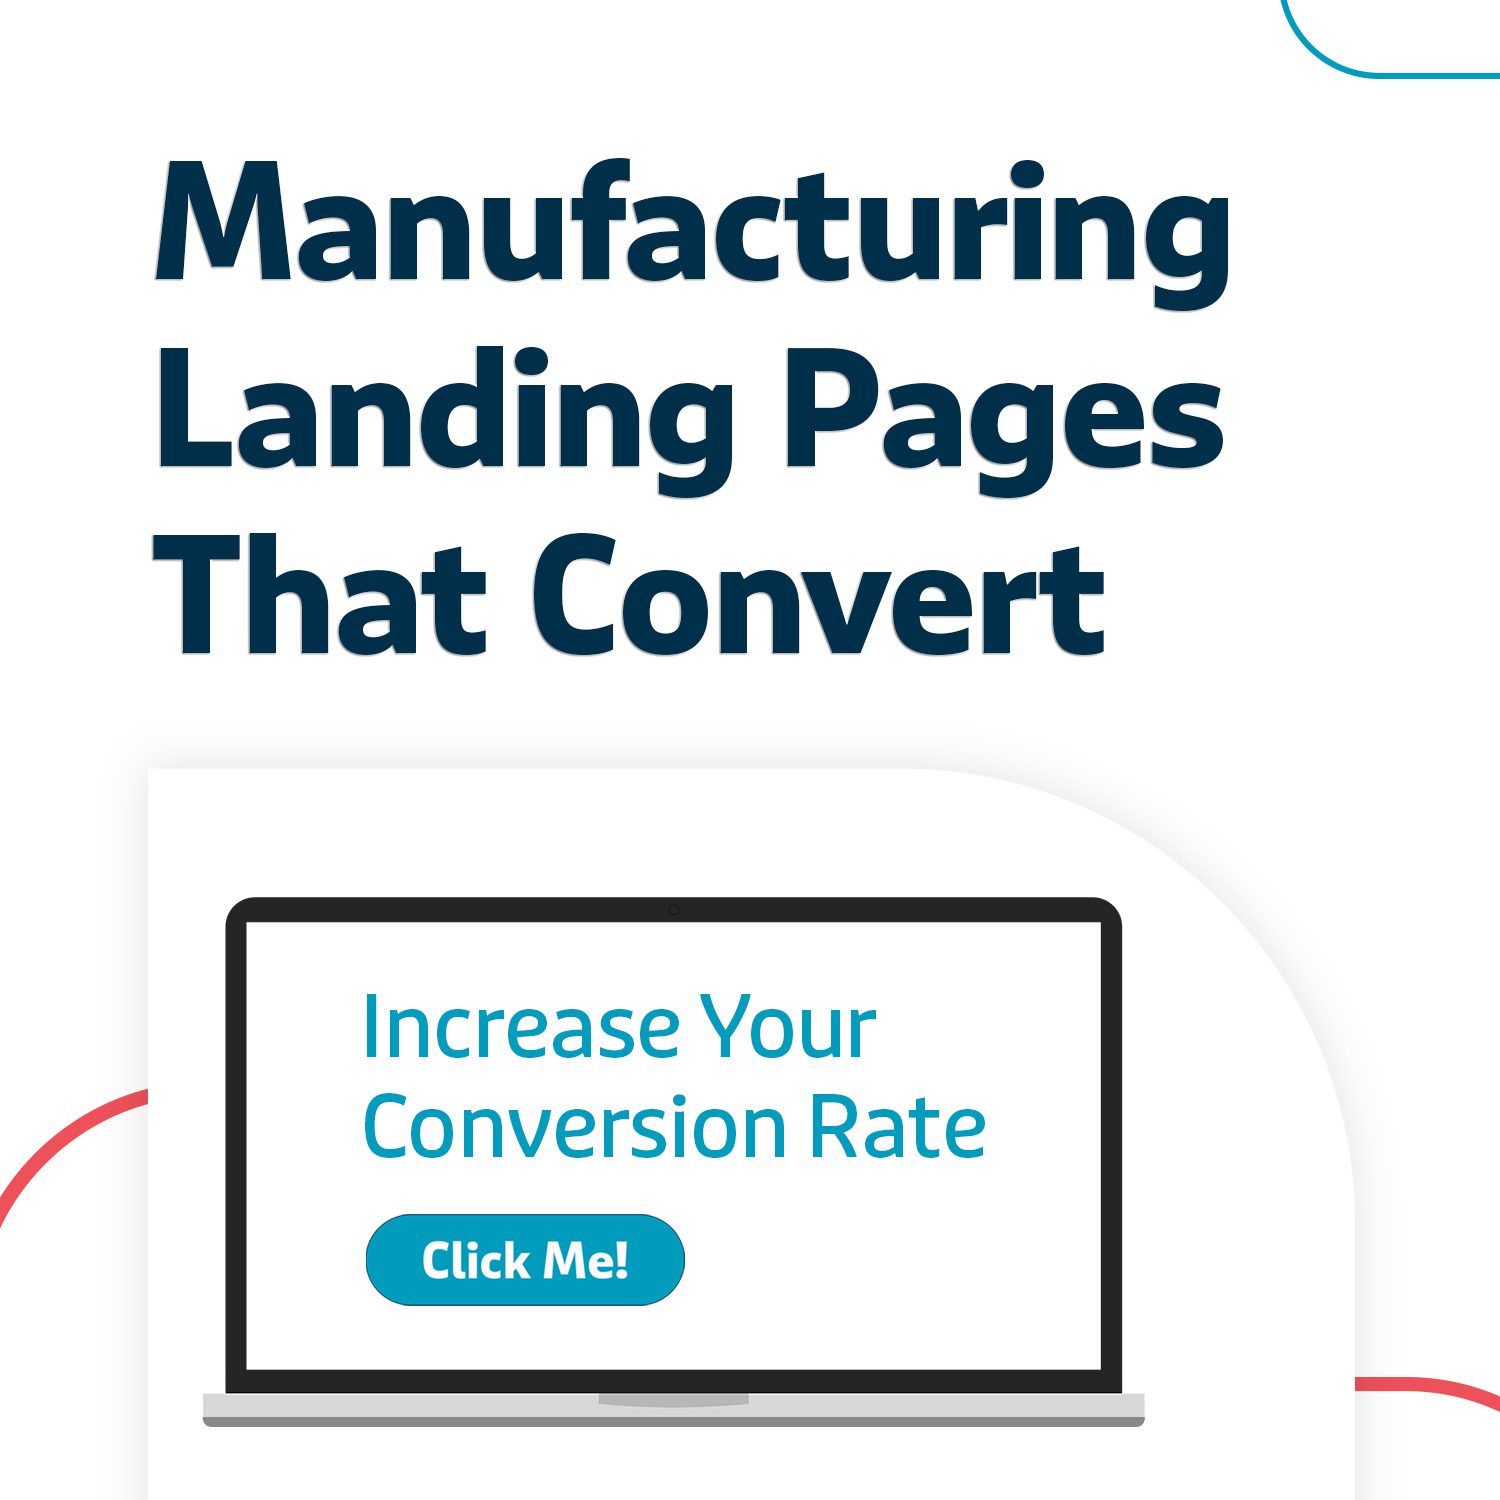 Designing Manufacturing Landing Pages that Convert